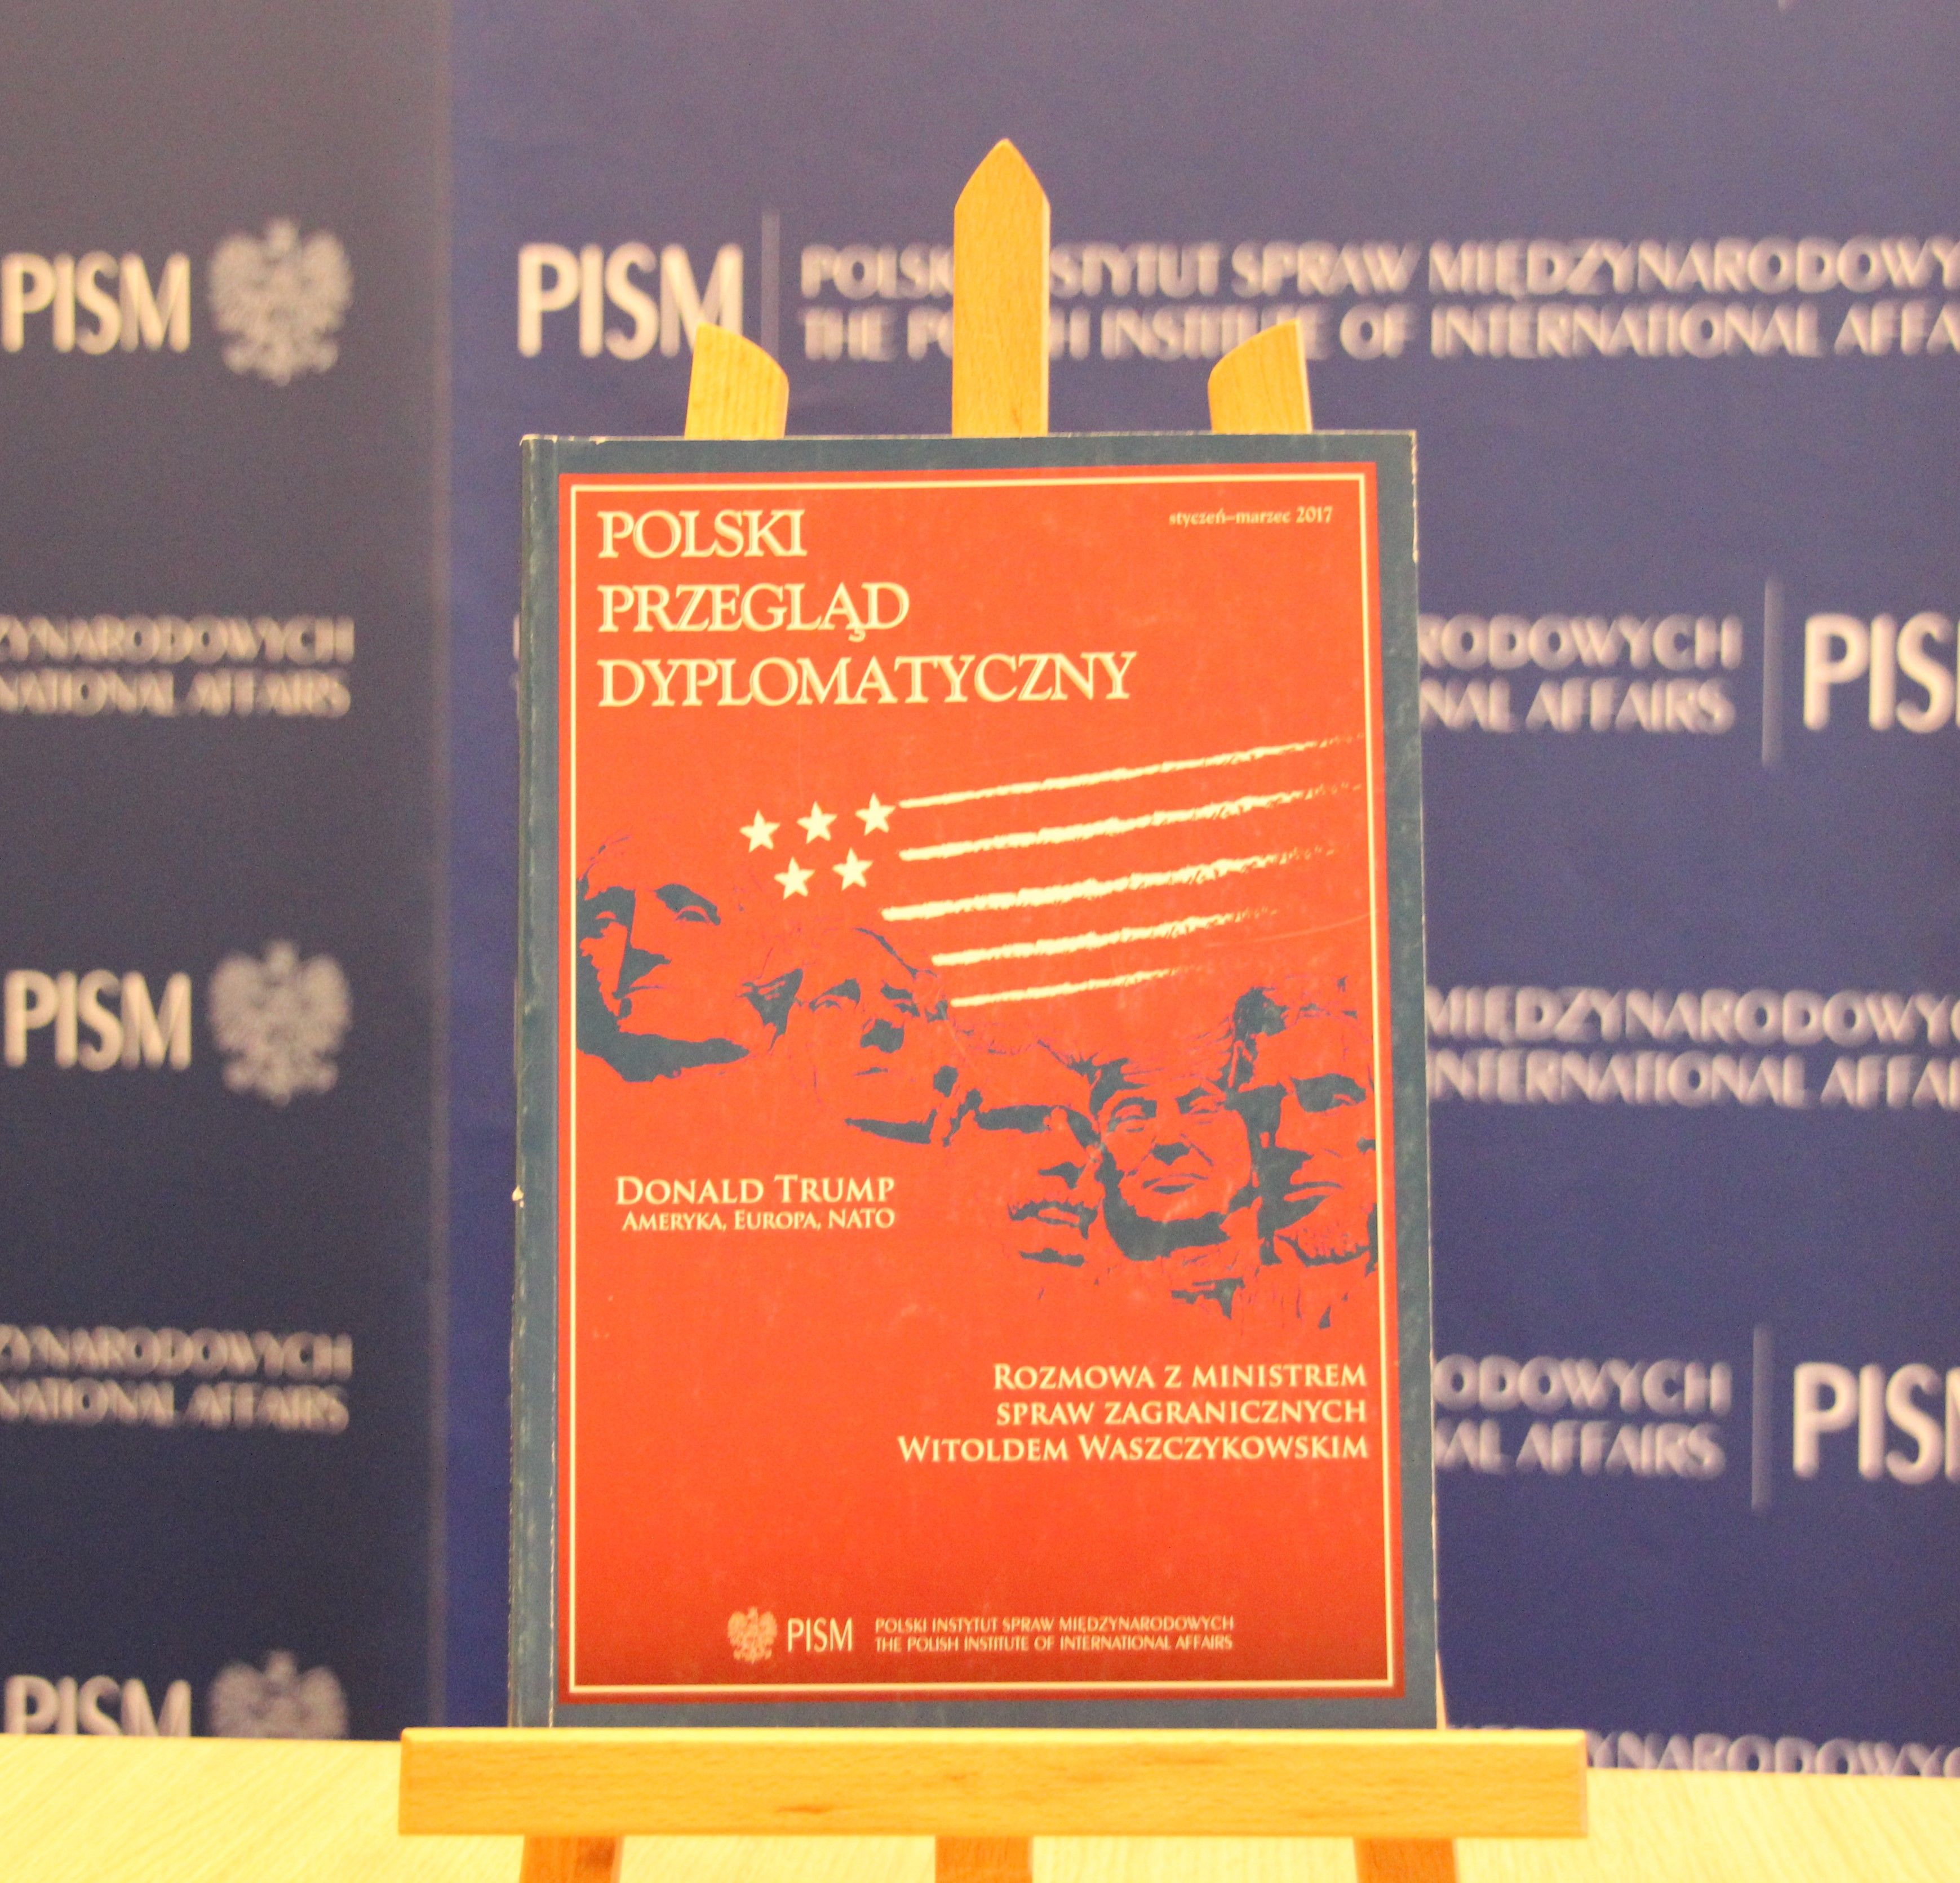 pism-national-certification-program